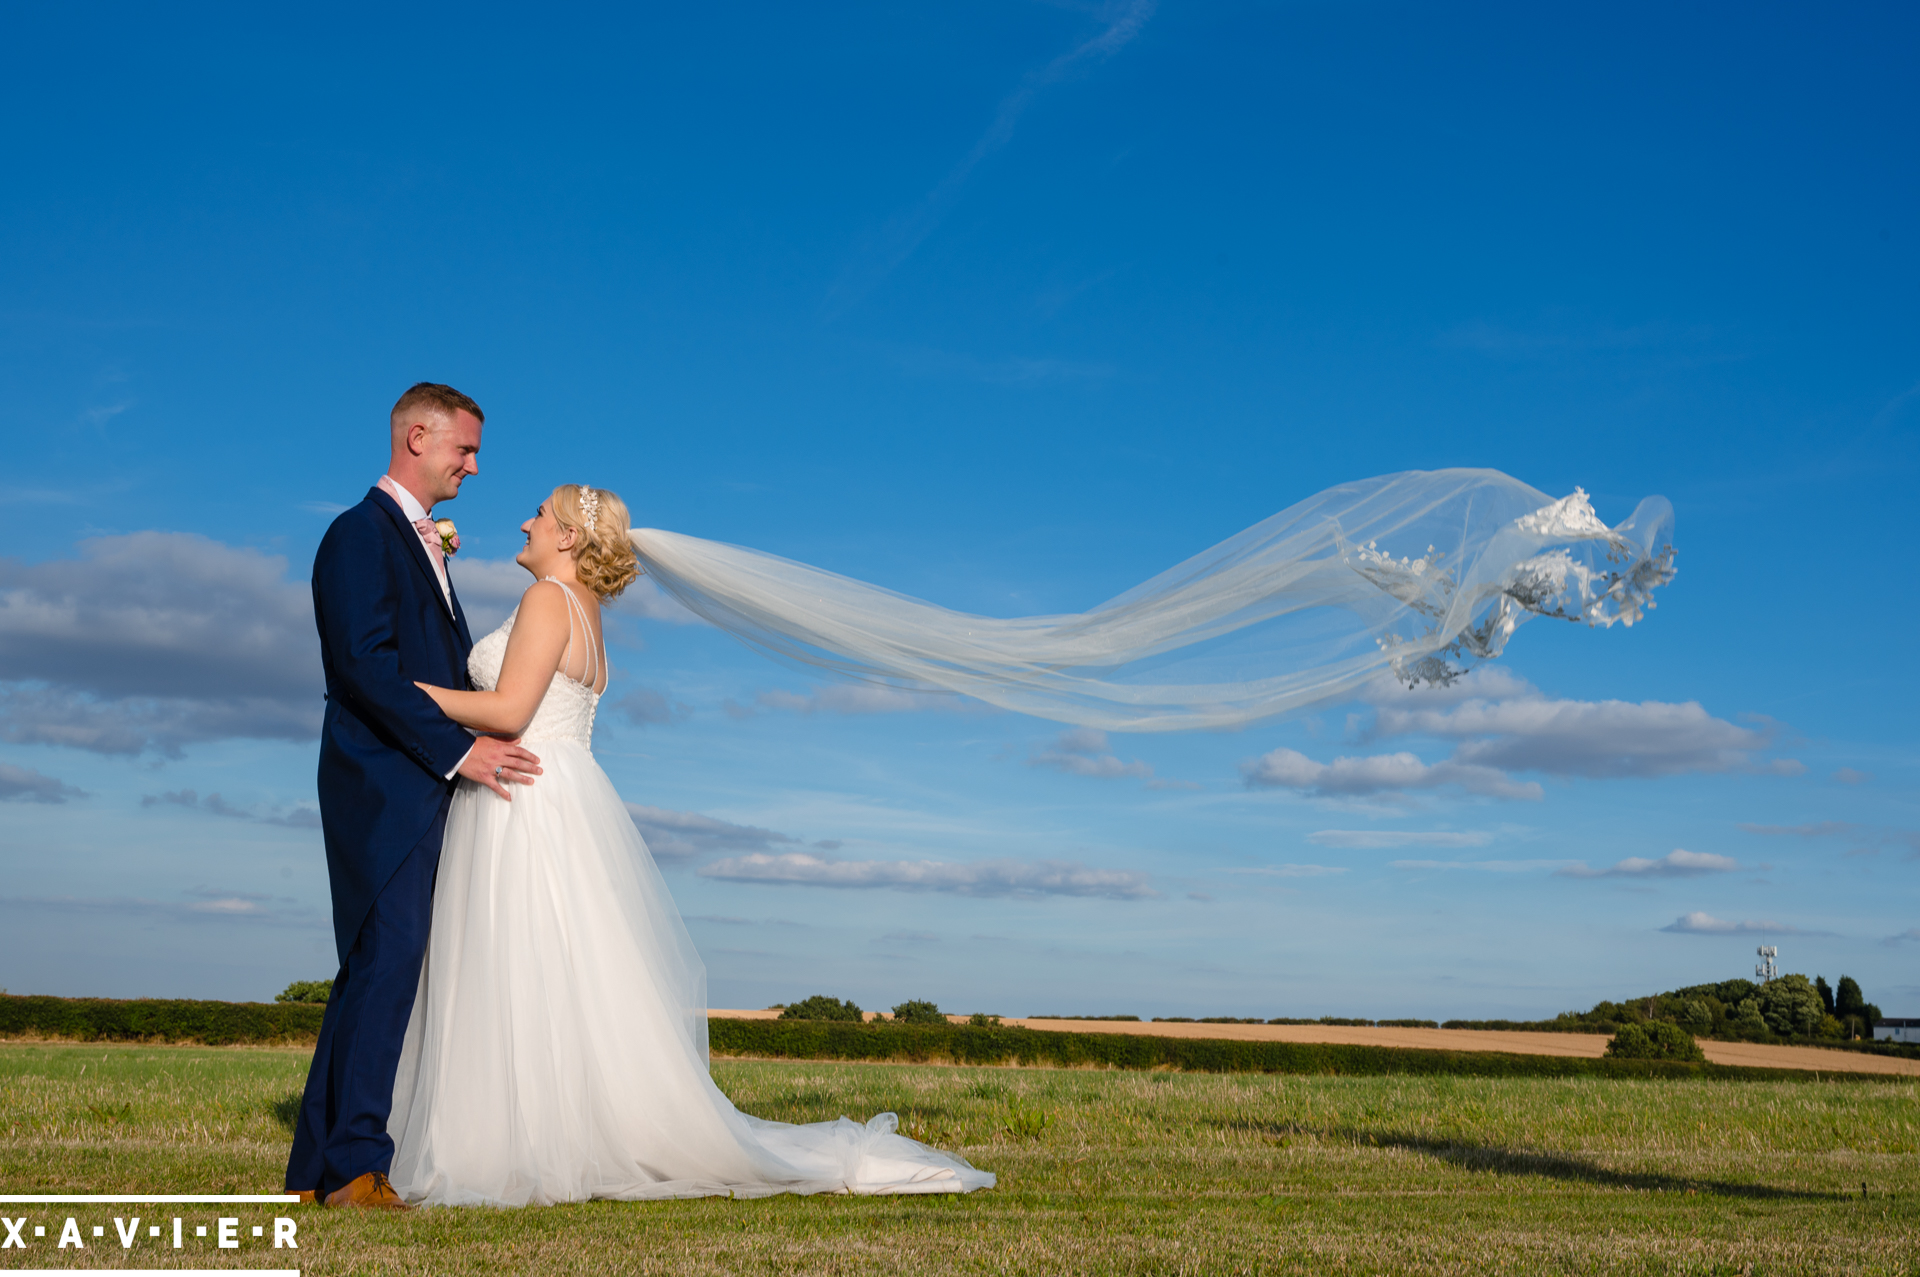 brides veil blows in the wind